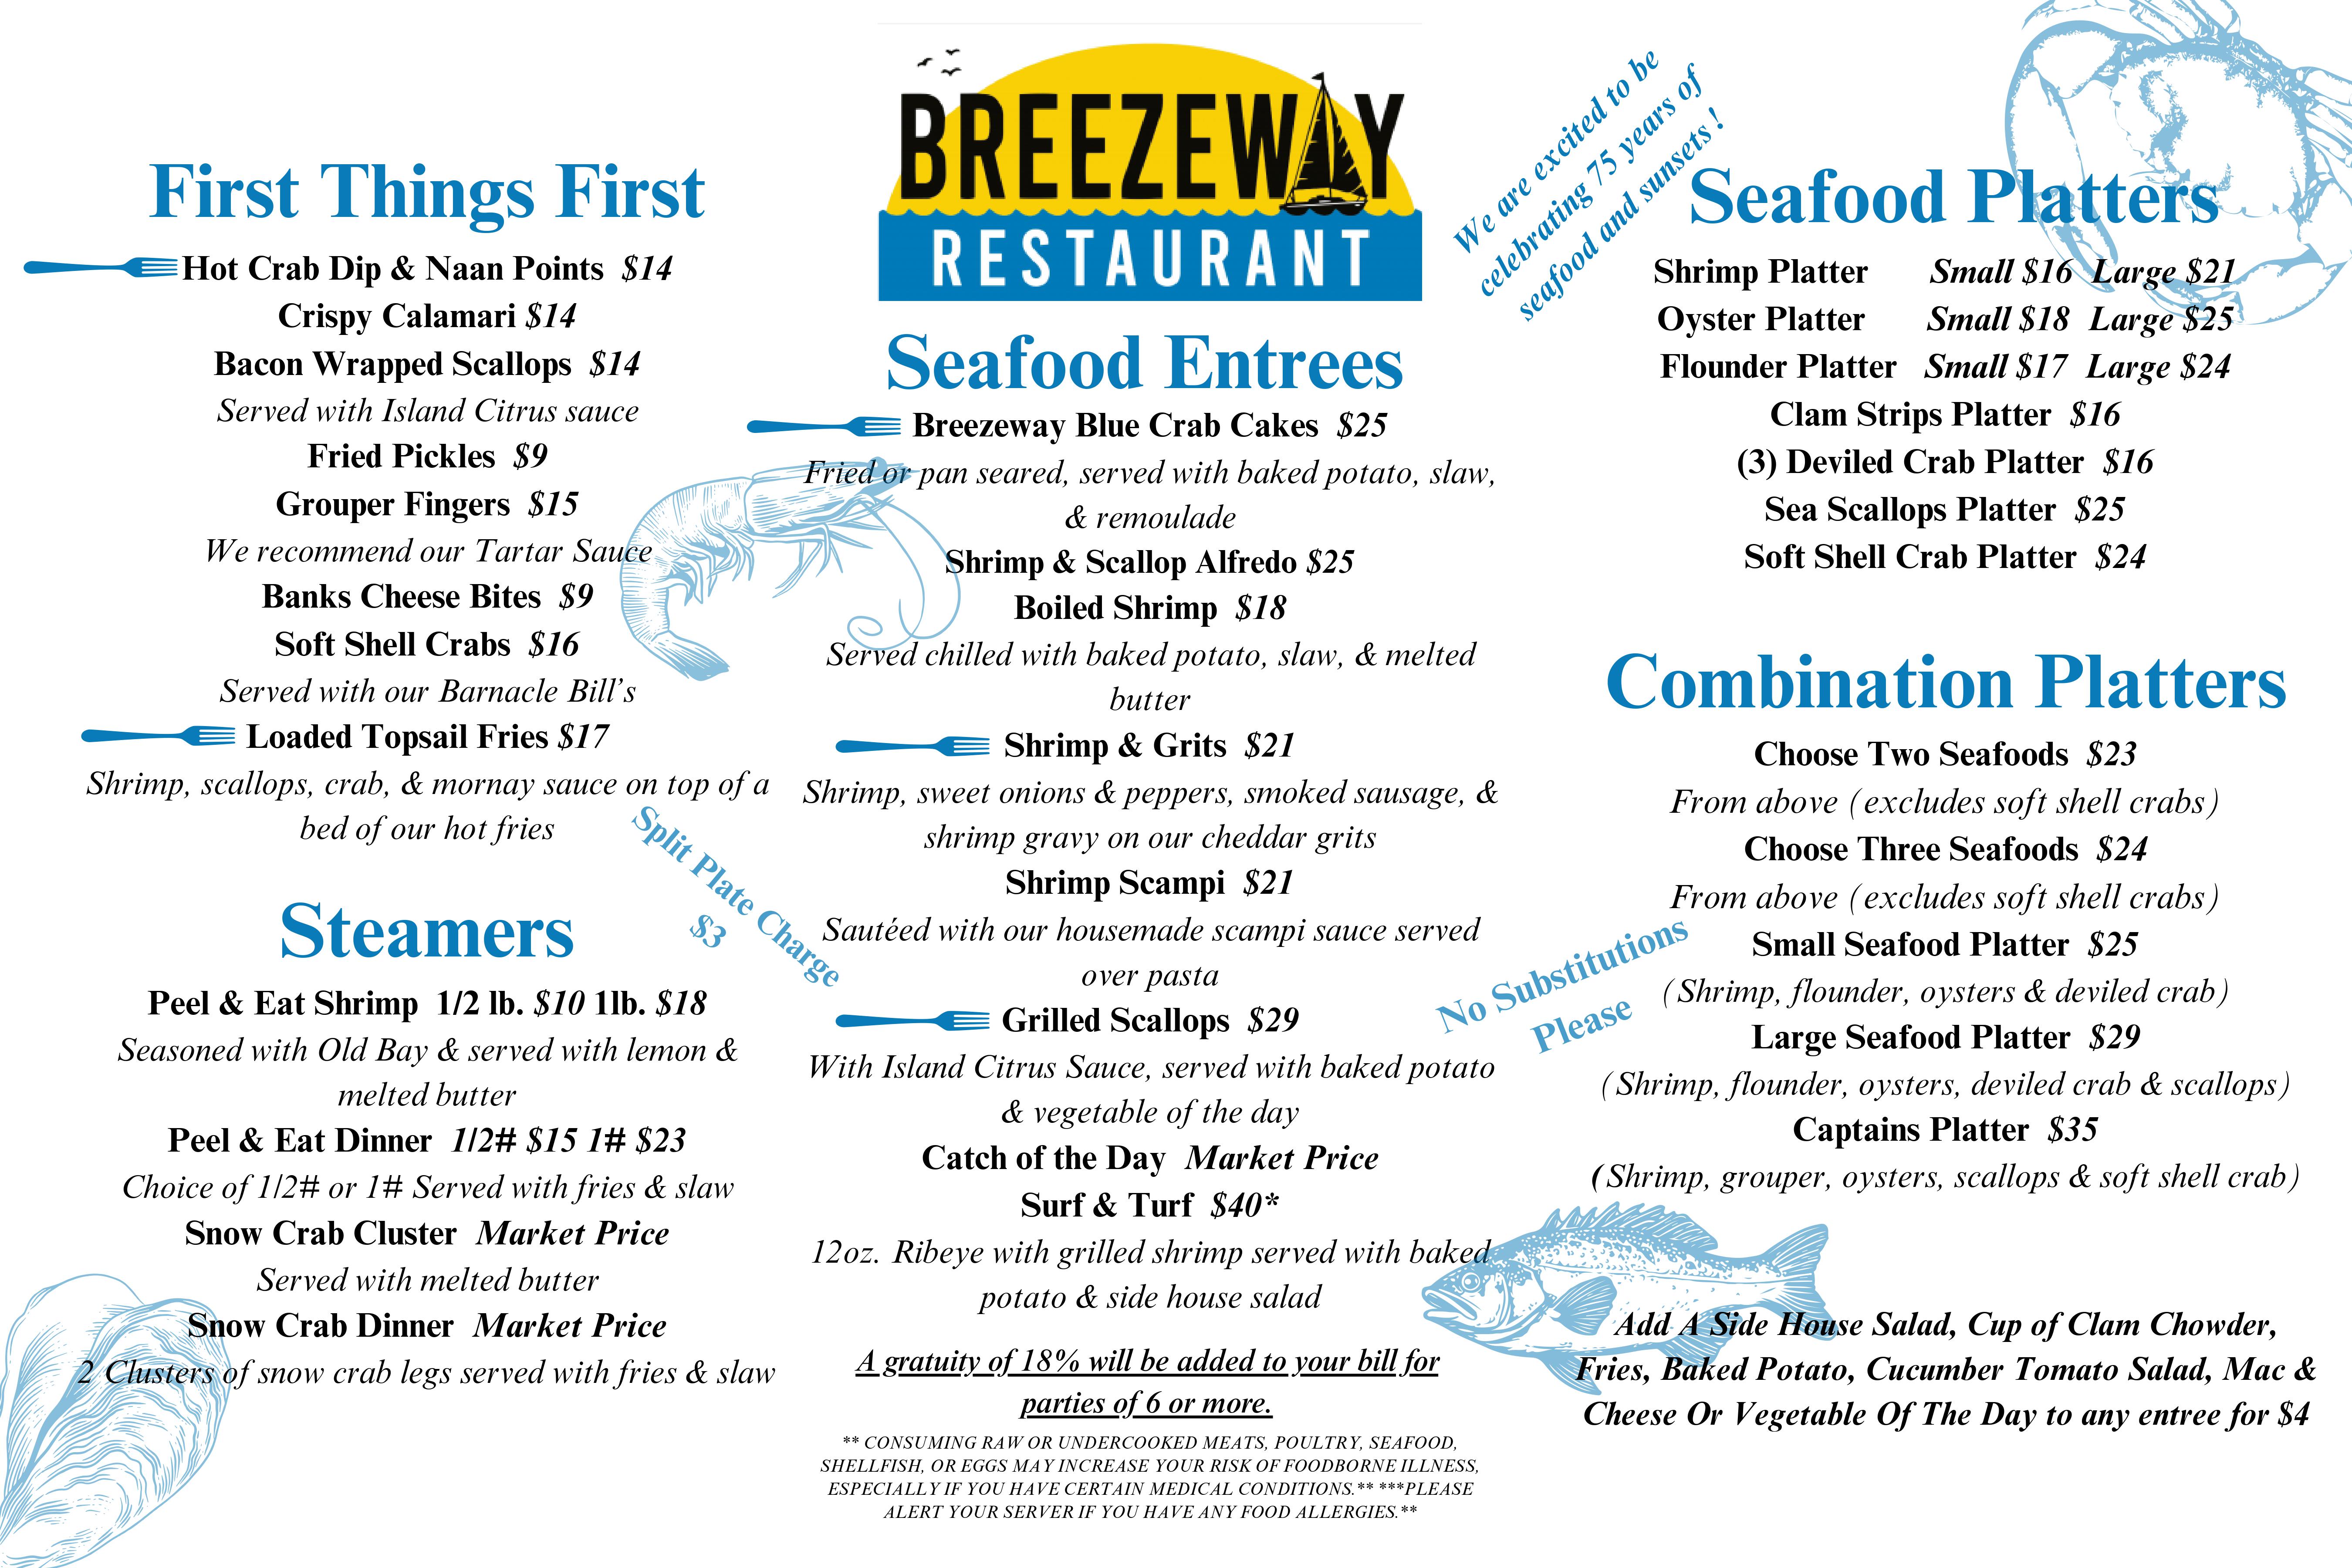 Breezeway Restaurant menu